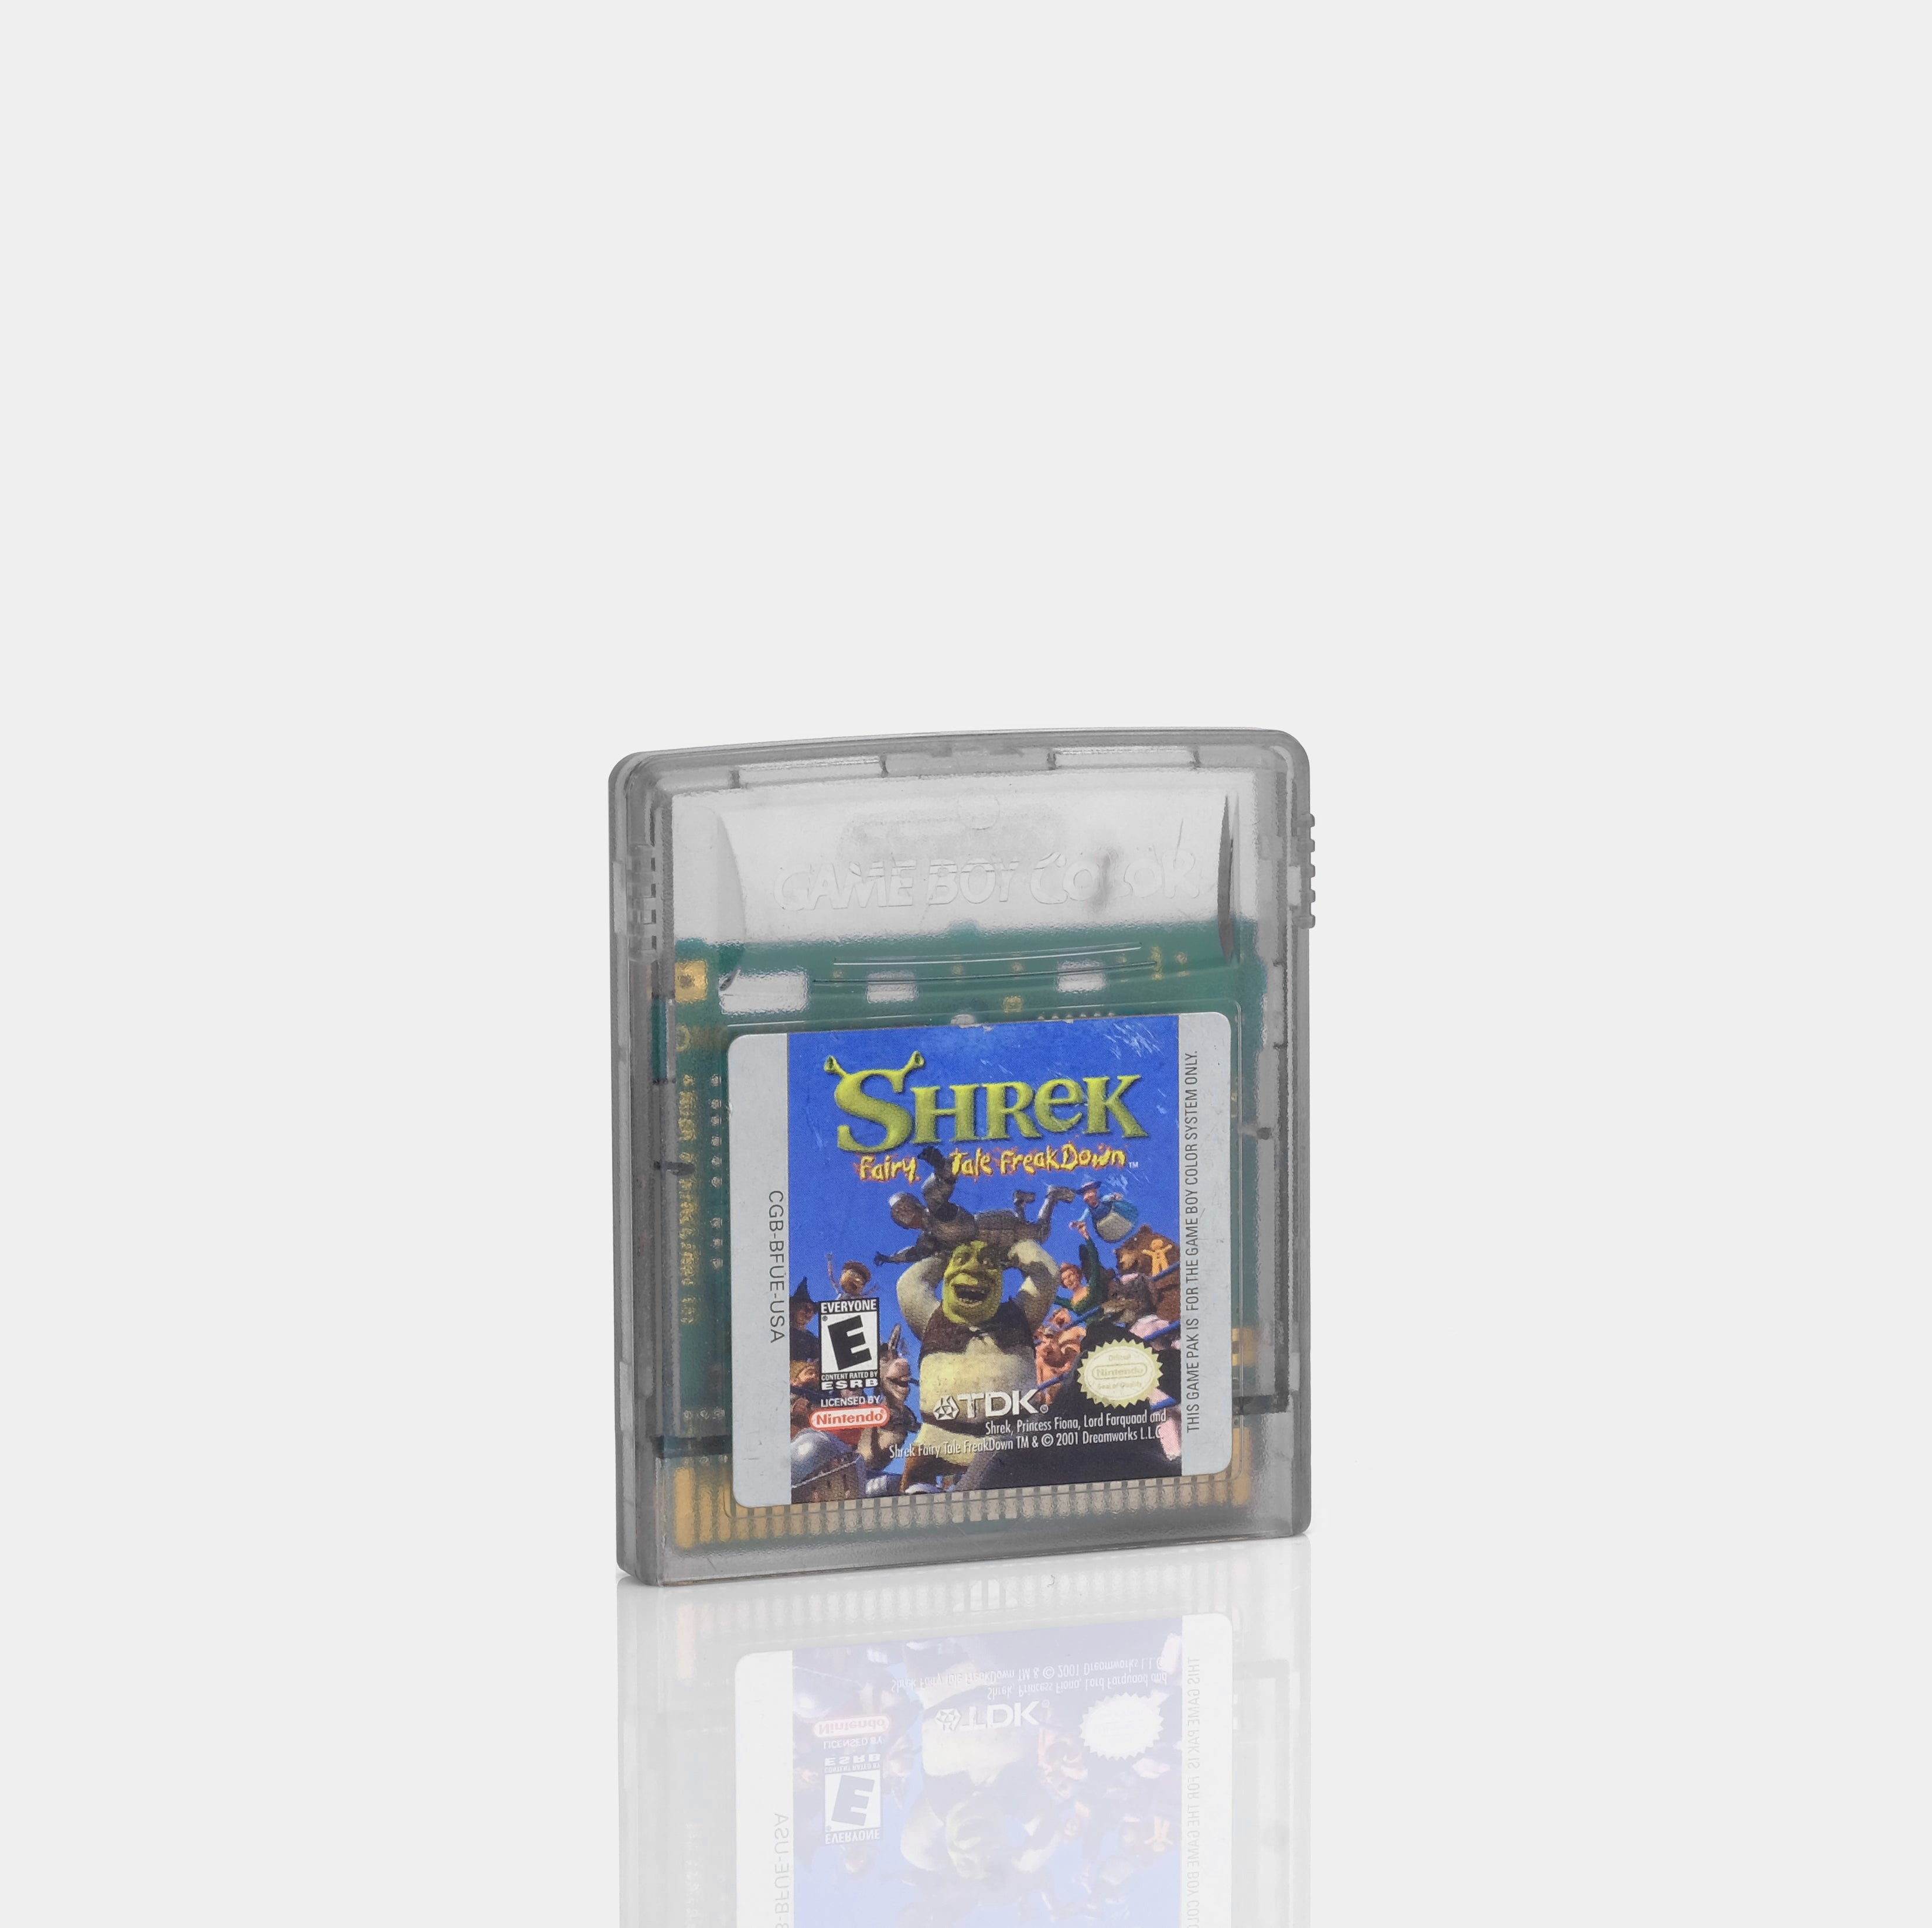 Shrek: Fairy Tale Freakdown (2001) Game Boy Color Game